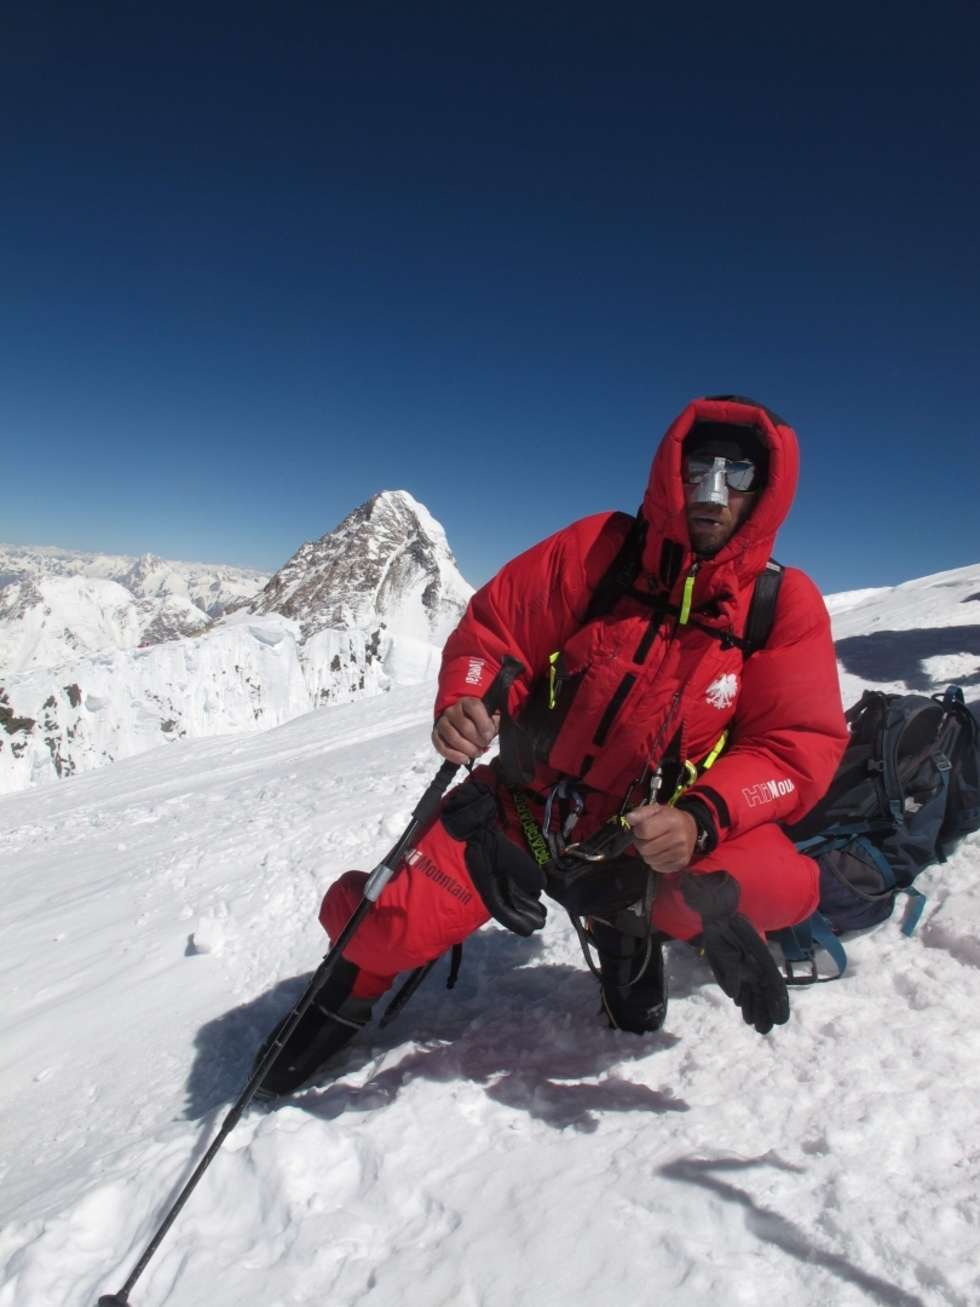  Szczyt Broad Peak 8047 m, Piotr Tomala w tle K2 